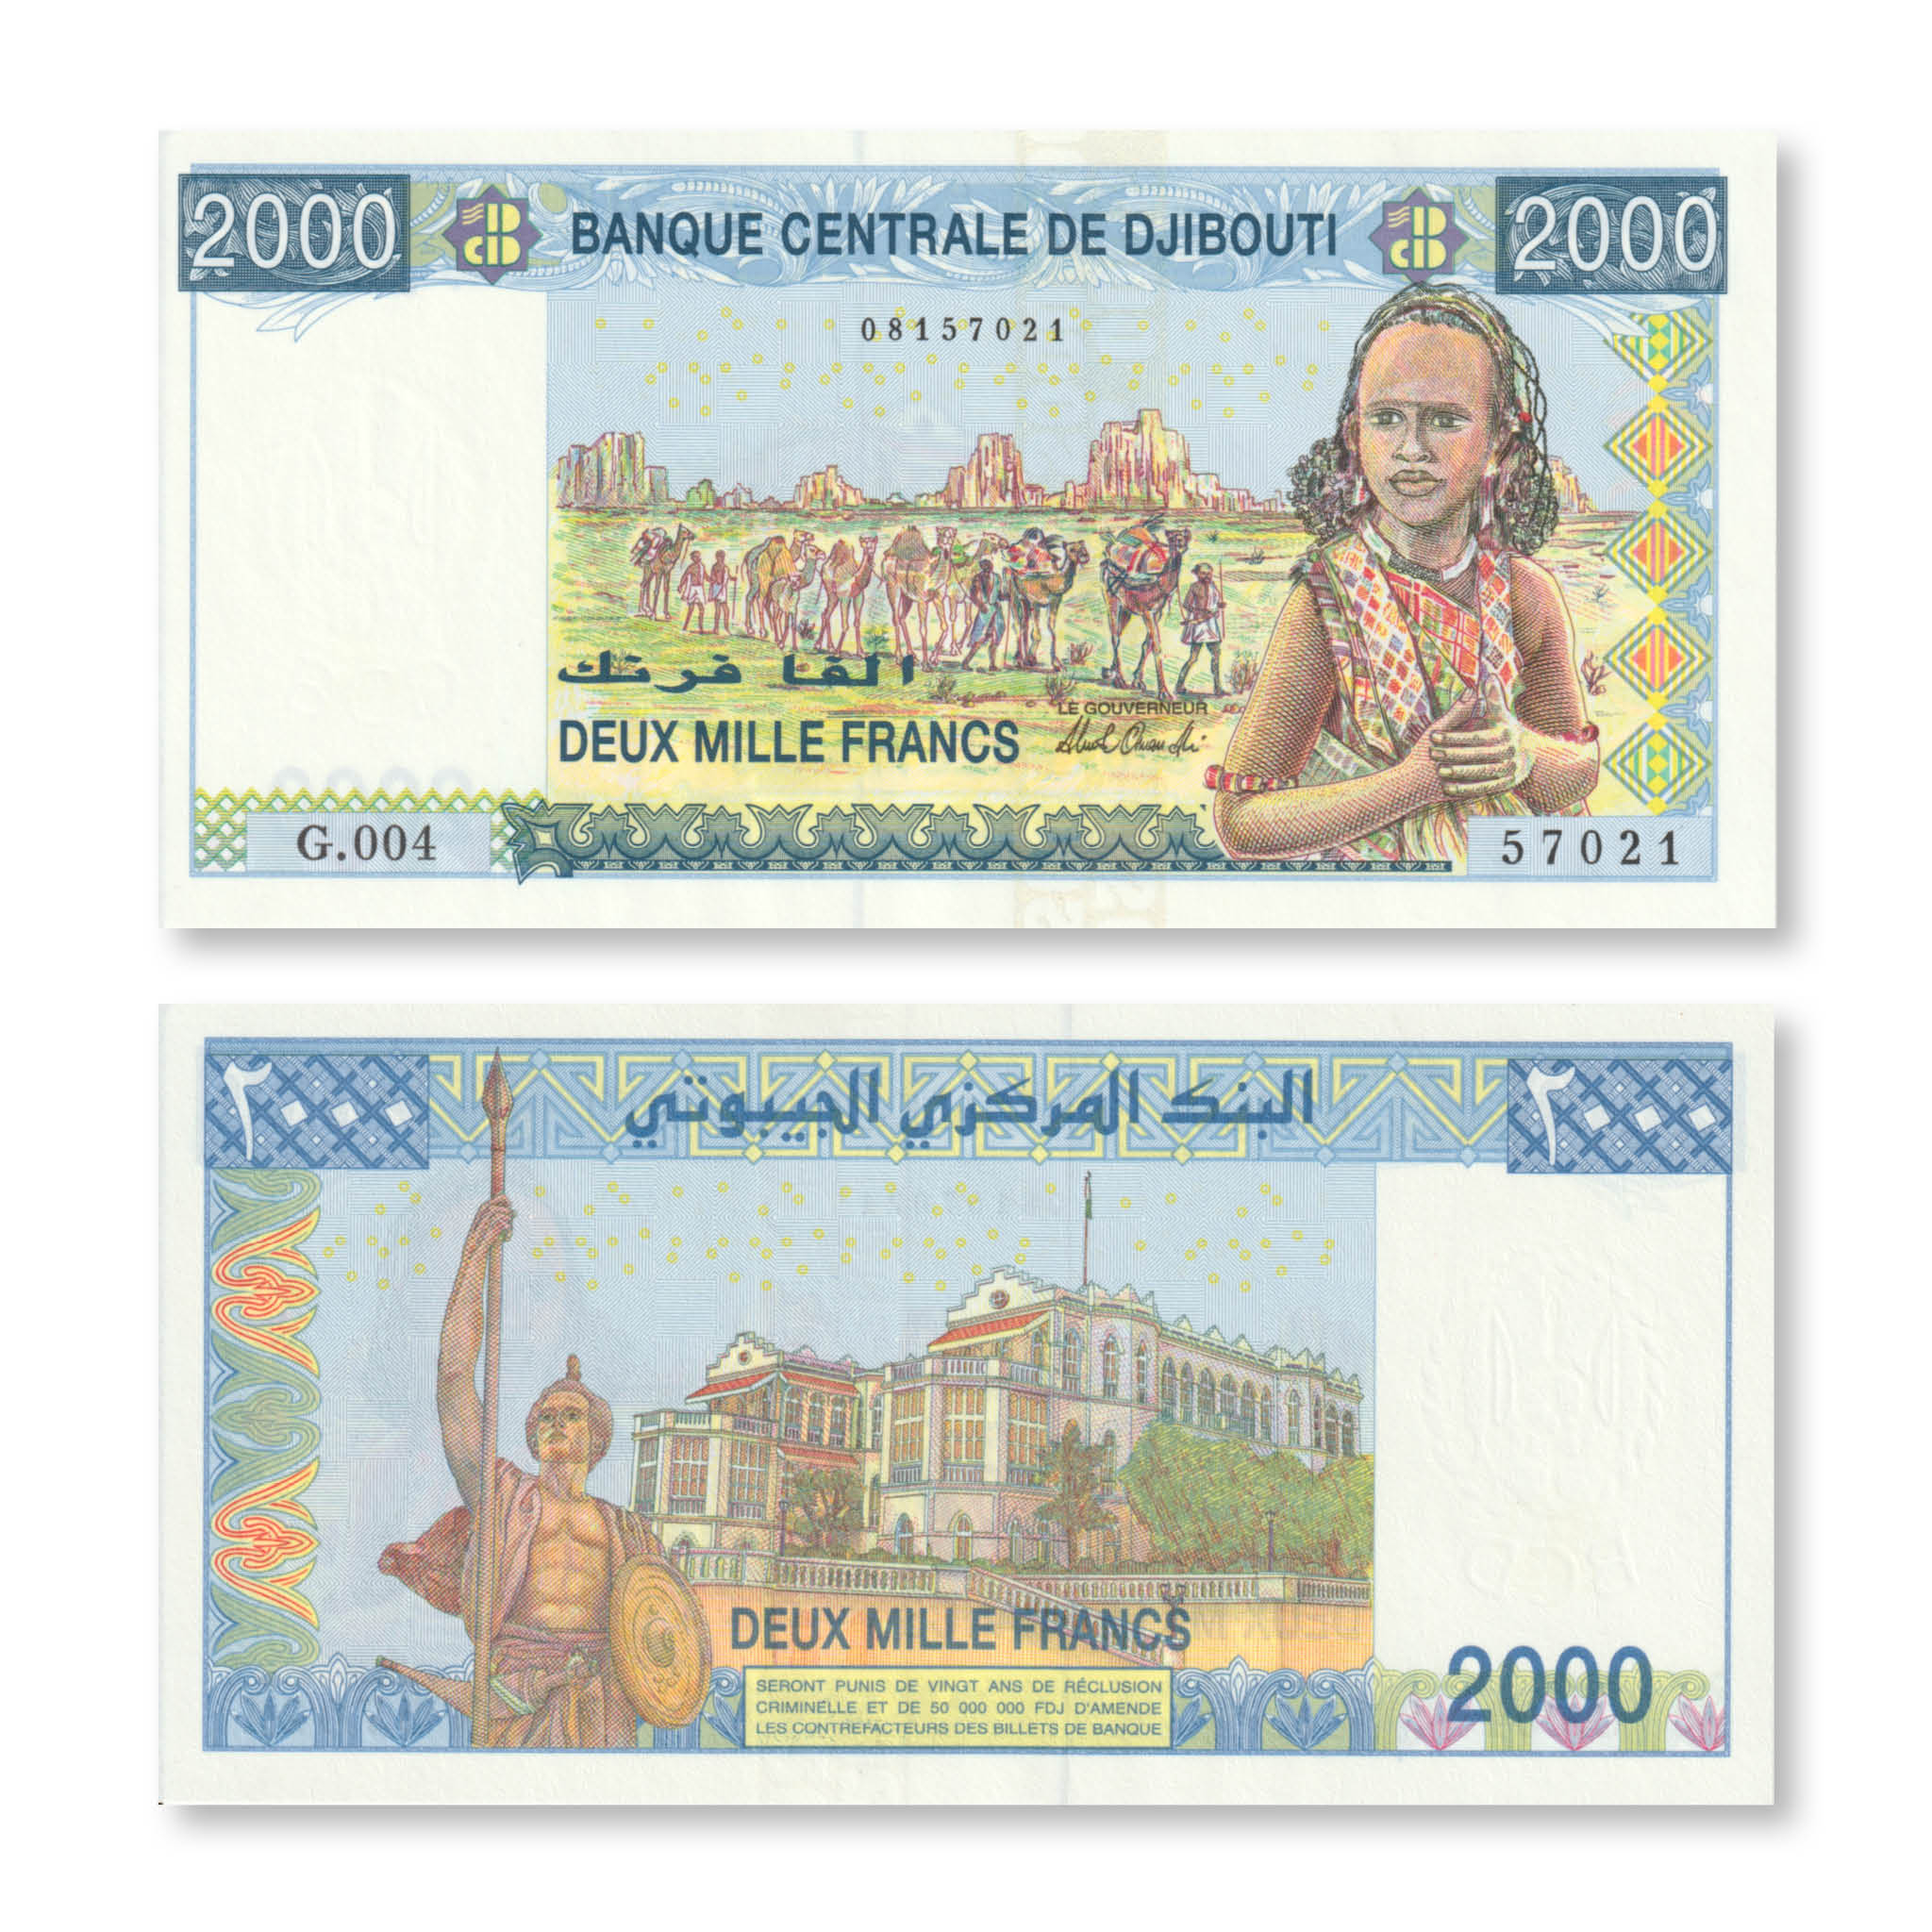 Djibouti 2000 Francs, 2008, B202b, P43, UNC - Robert's World Money - World Banknotes